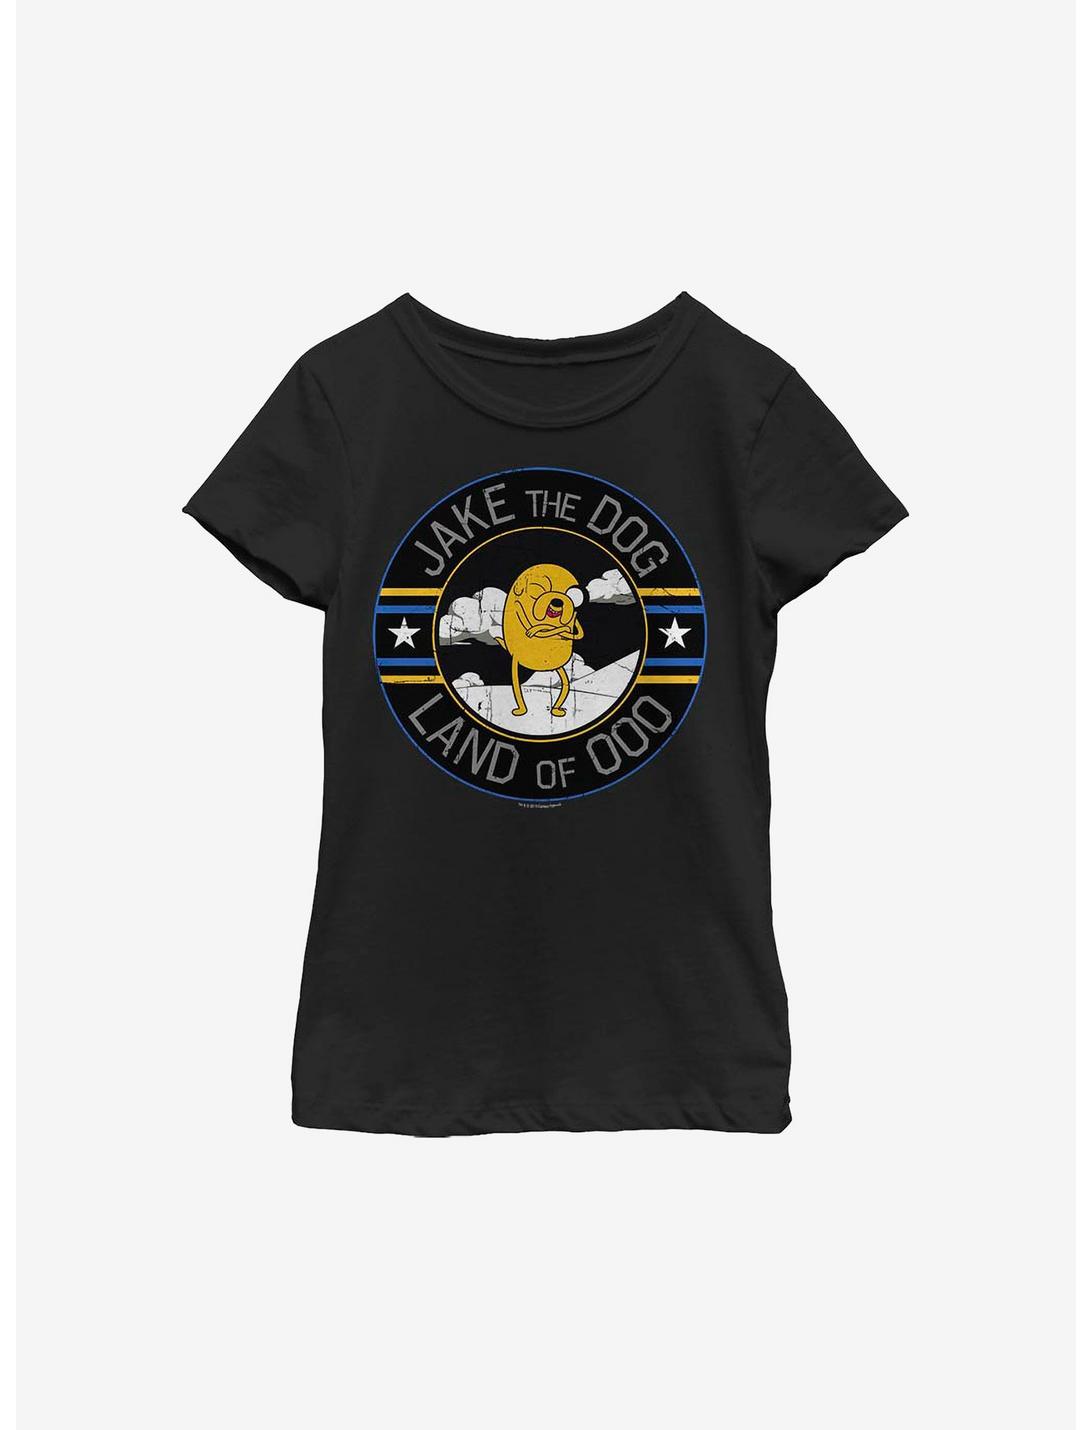 Adventure Time Jake The Dog Youth Girls T-Shirt, BLACK, hi-res